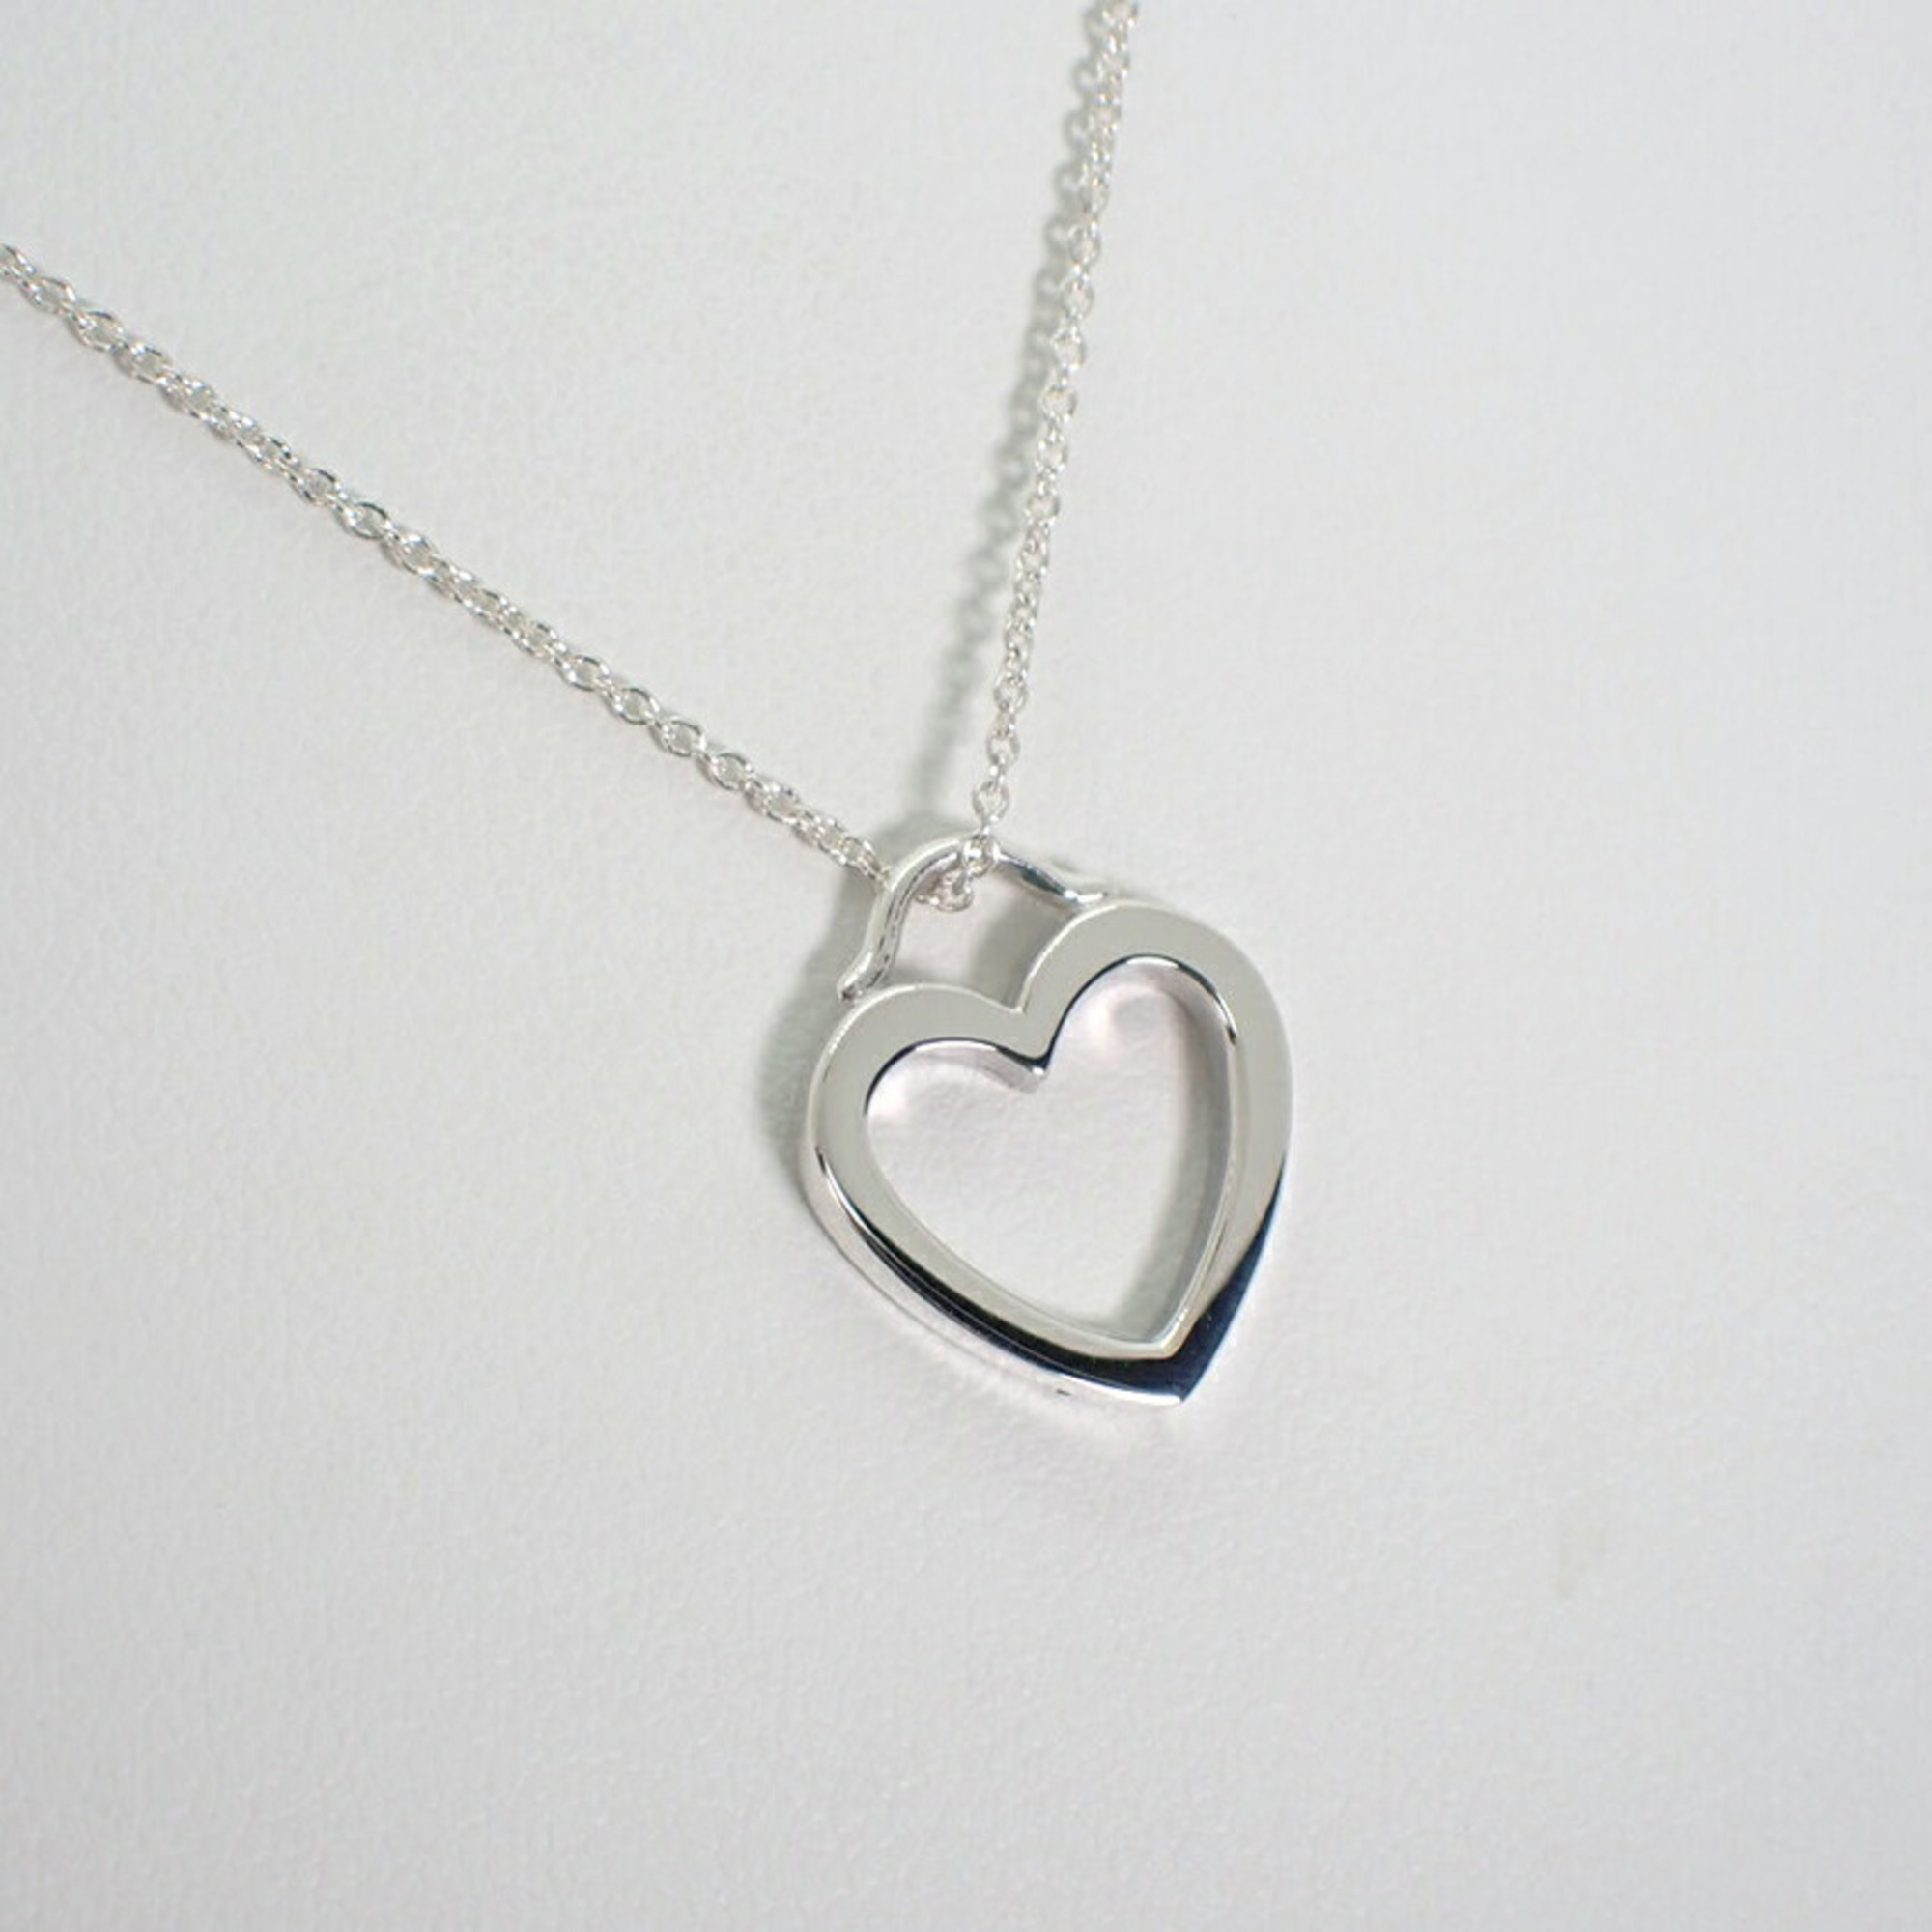 TIFFANY 925 sentimental heart pendant necklace